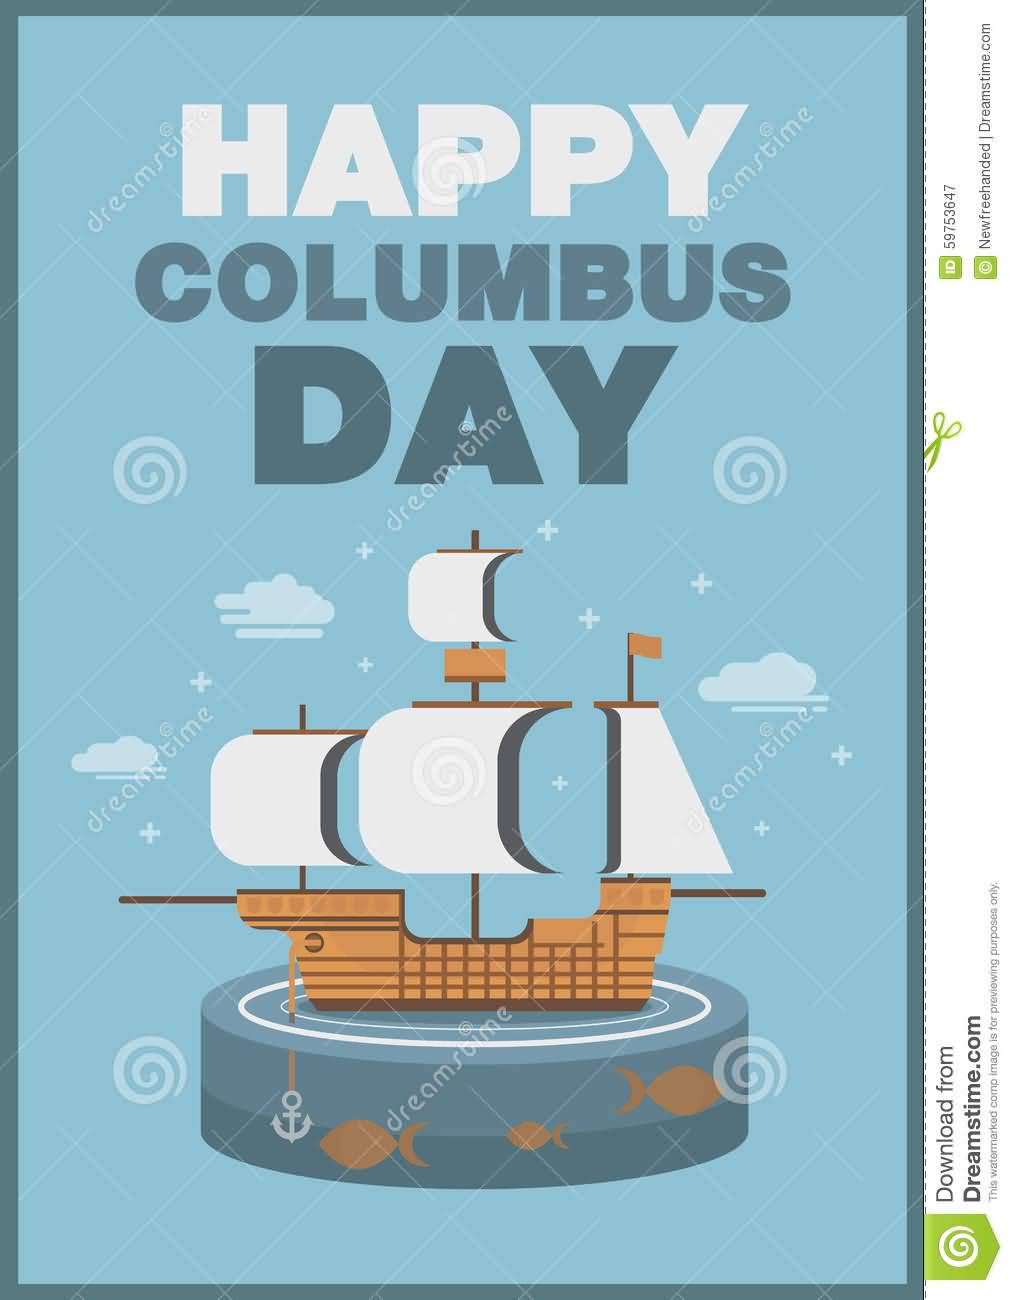 Happy Columbus Day Poster Image